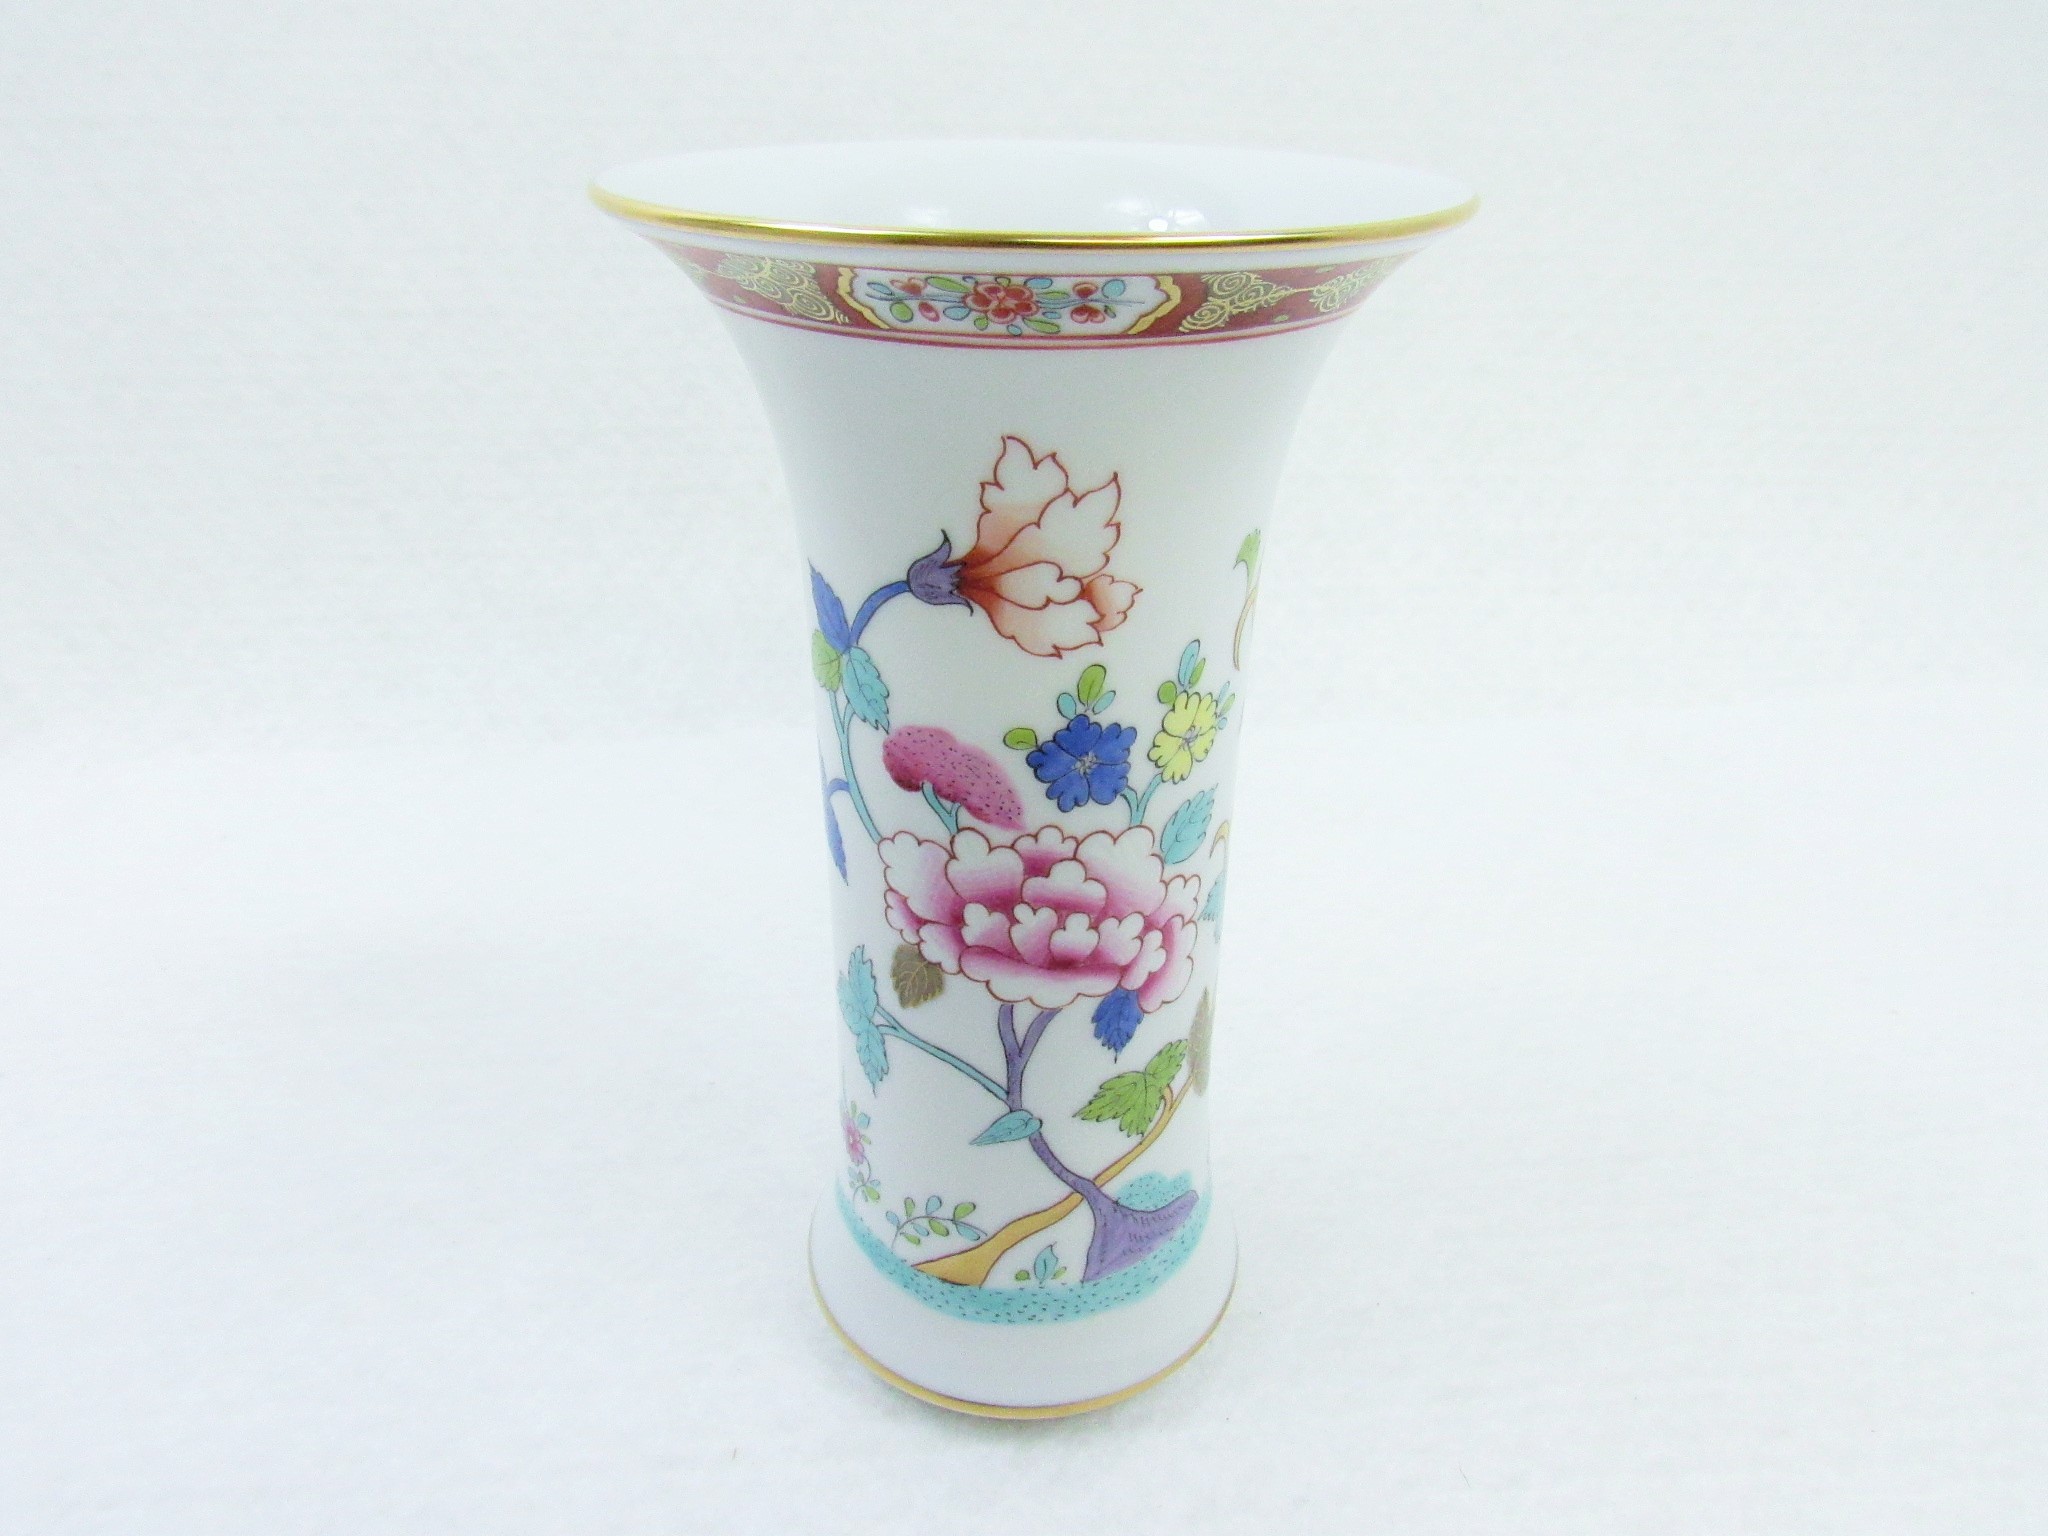 Image de Herend Porzellan Vase, SH Shanghai, 7037